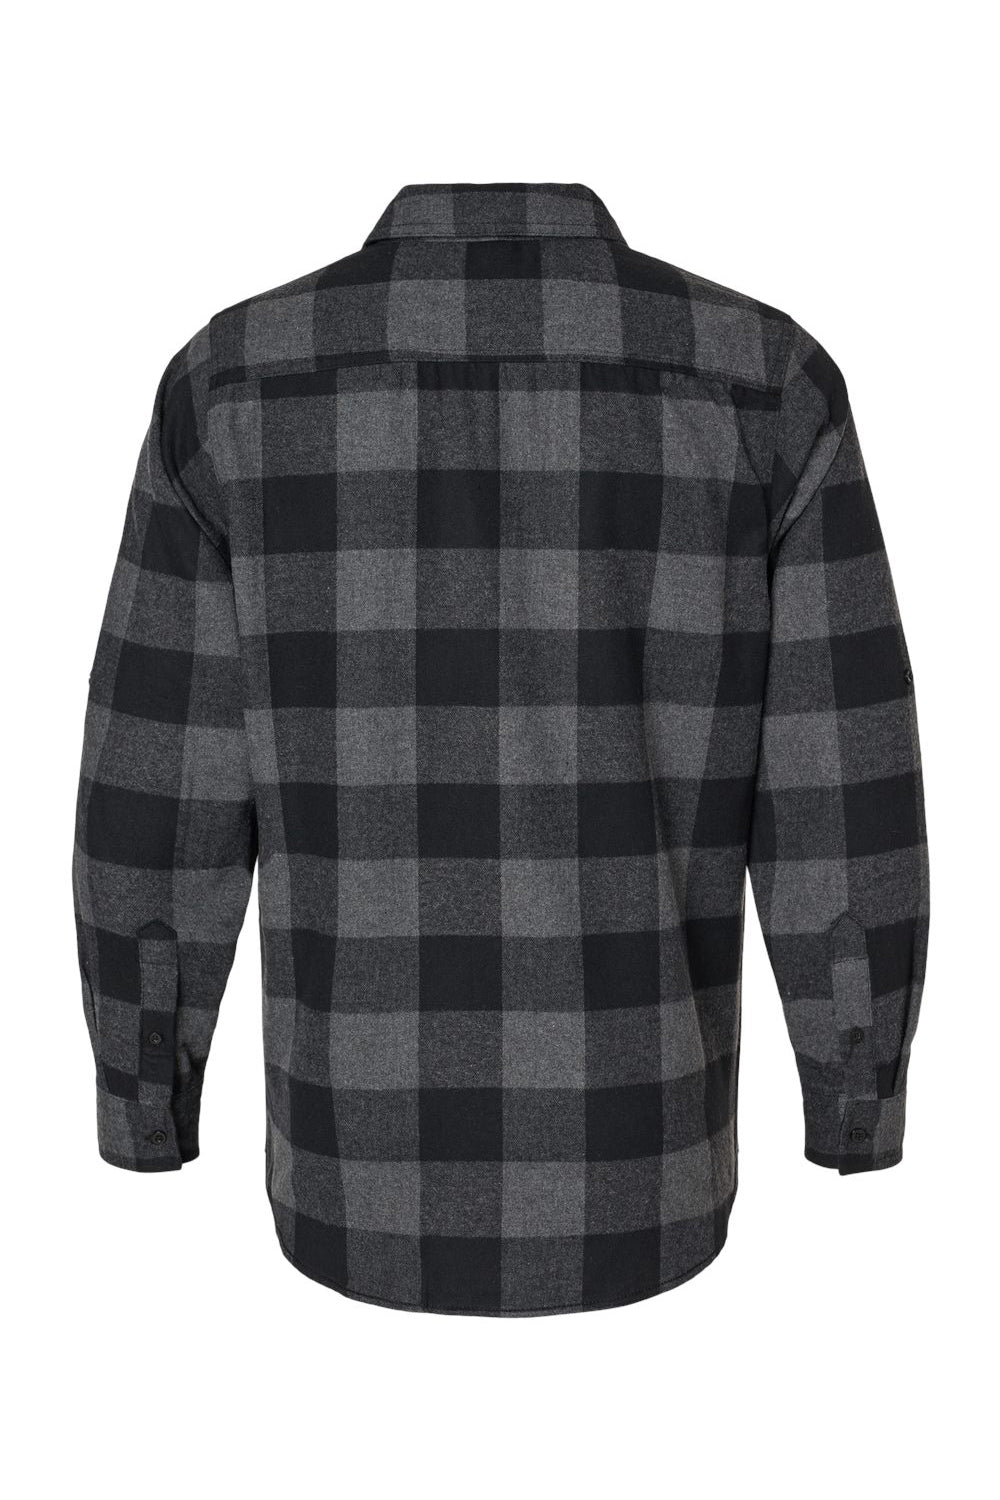 Burnside B8210/8210 Mens Flannel Long Sleeve Button Down Shirt w/ Double Pockets Charcoal Grey/Black Flat Back